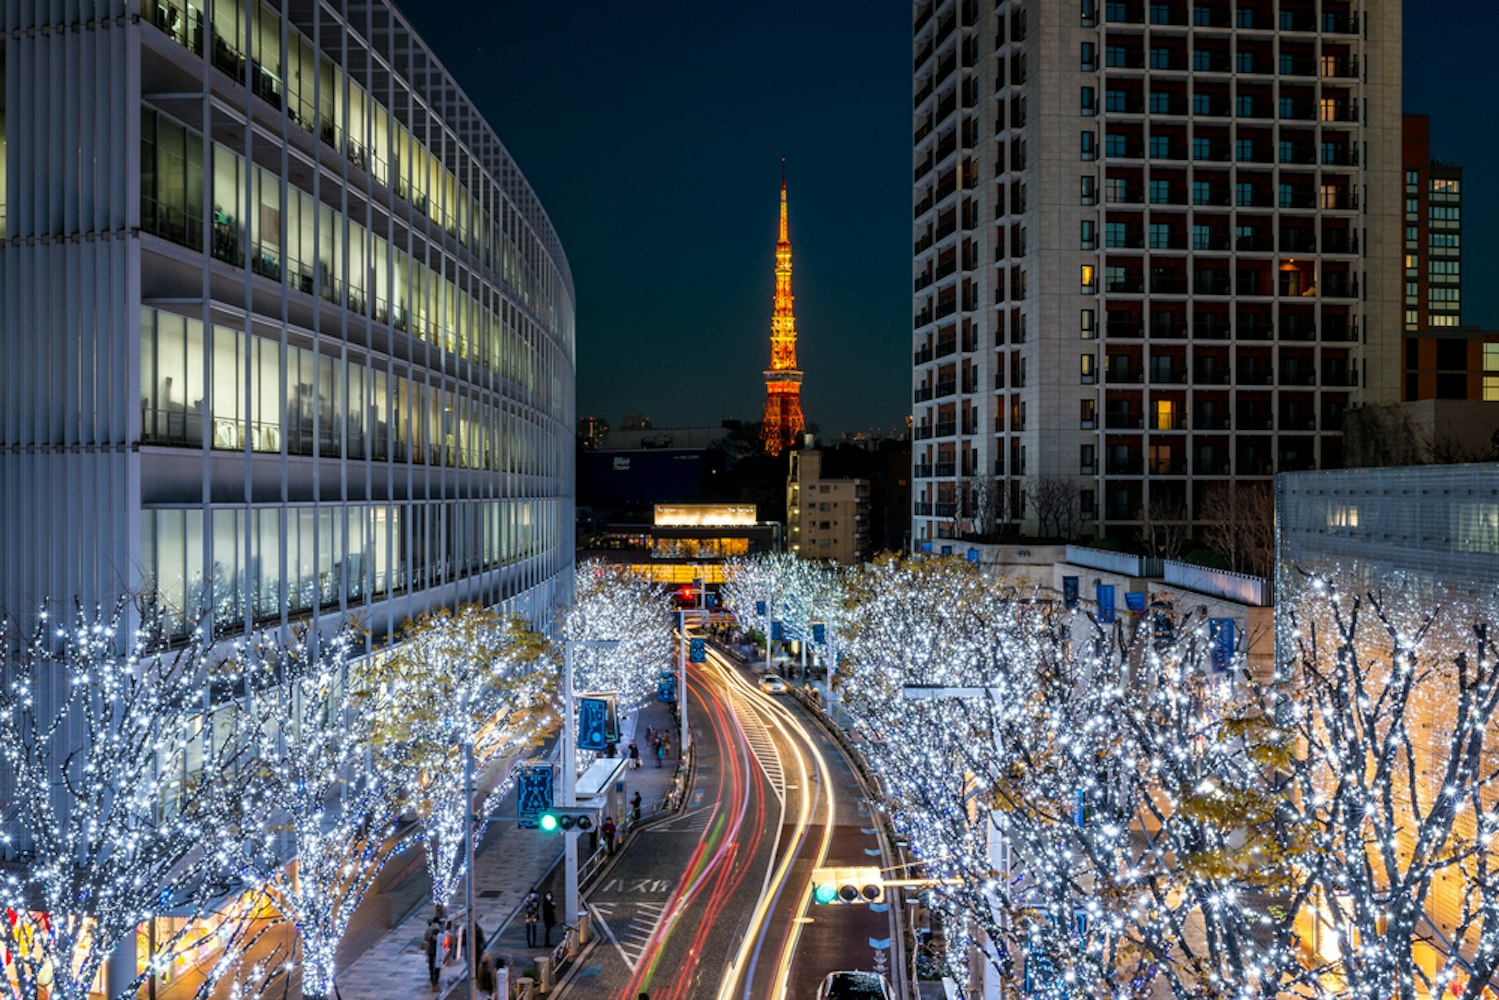 Tokyo Tower with Christmas illumination at Roppongi